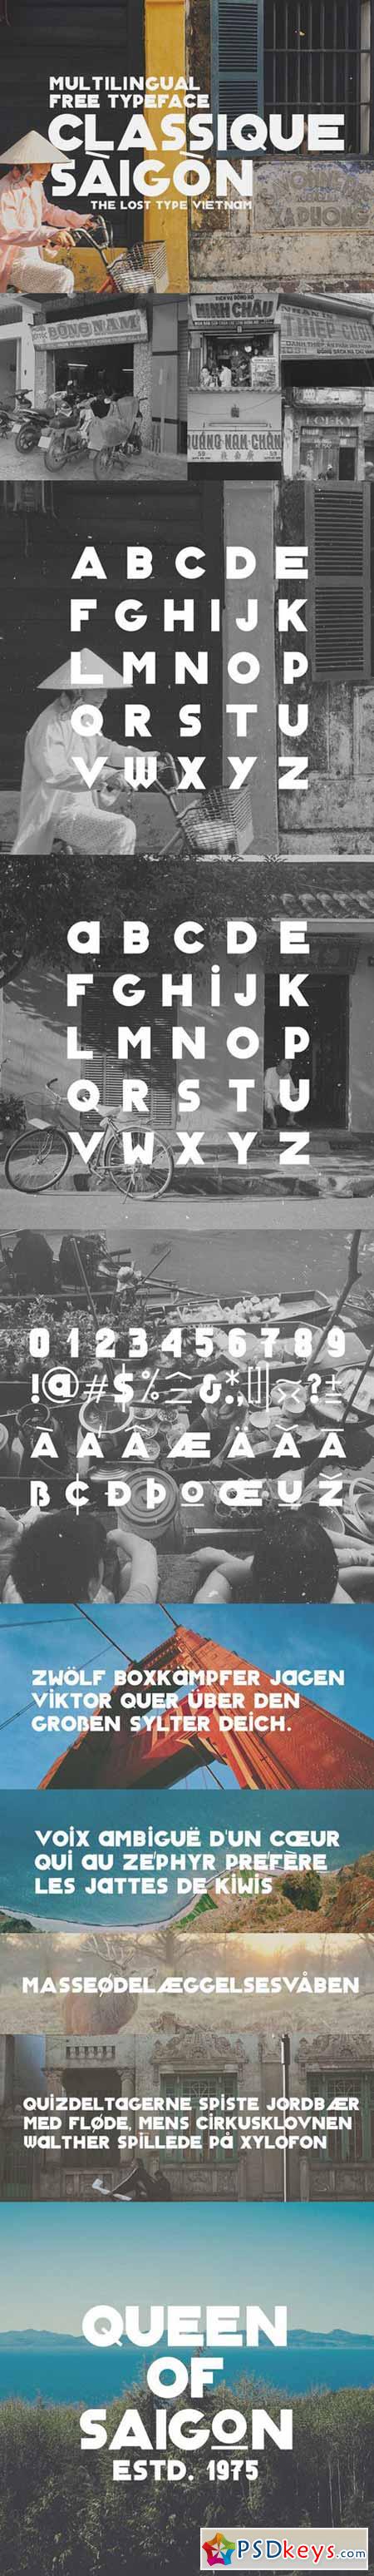 Classique Saigon Typeface